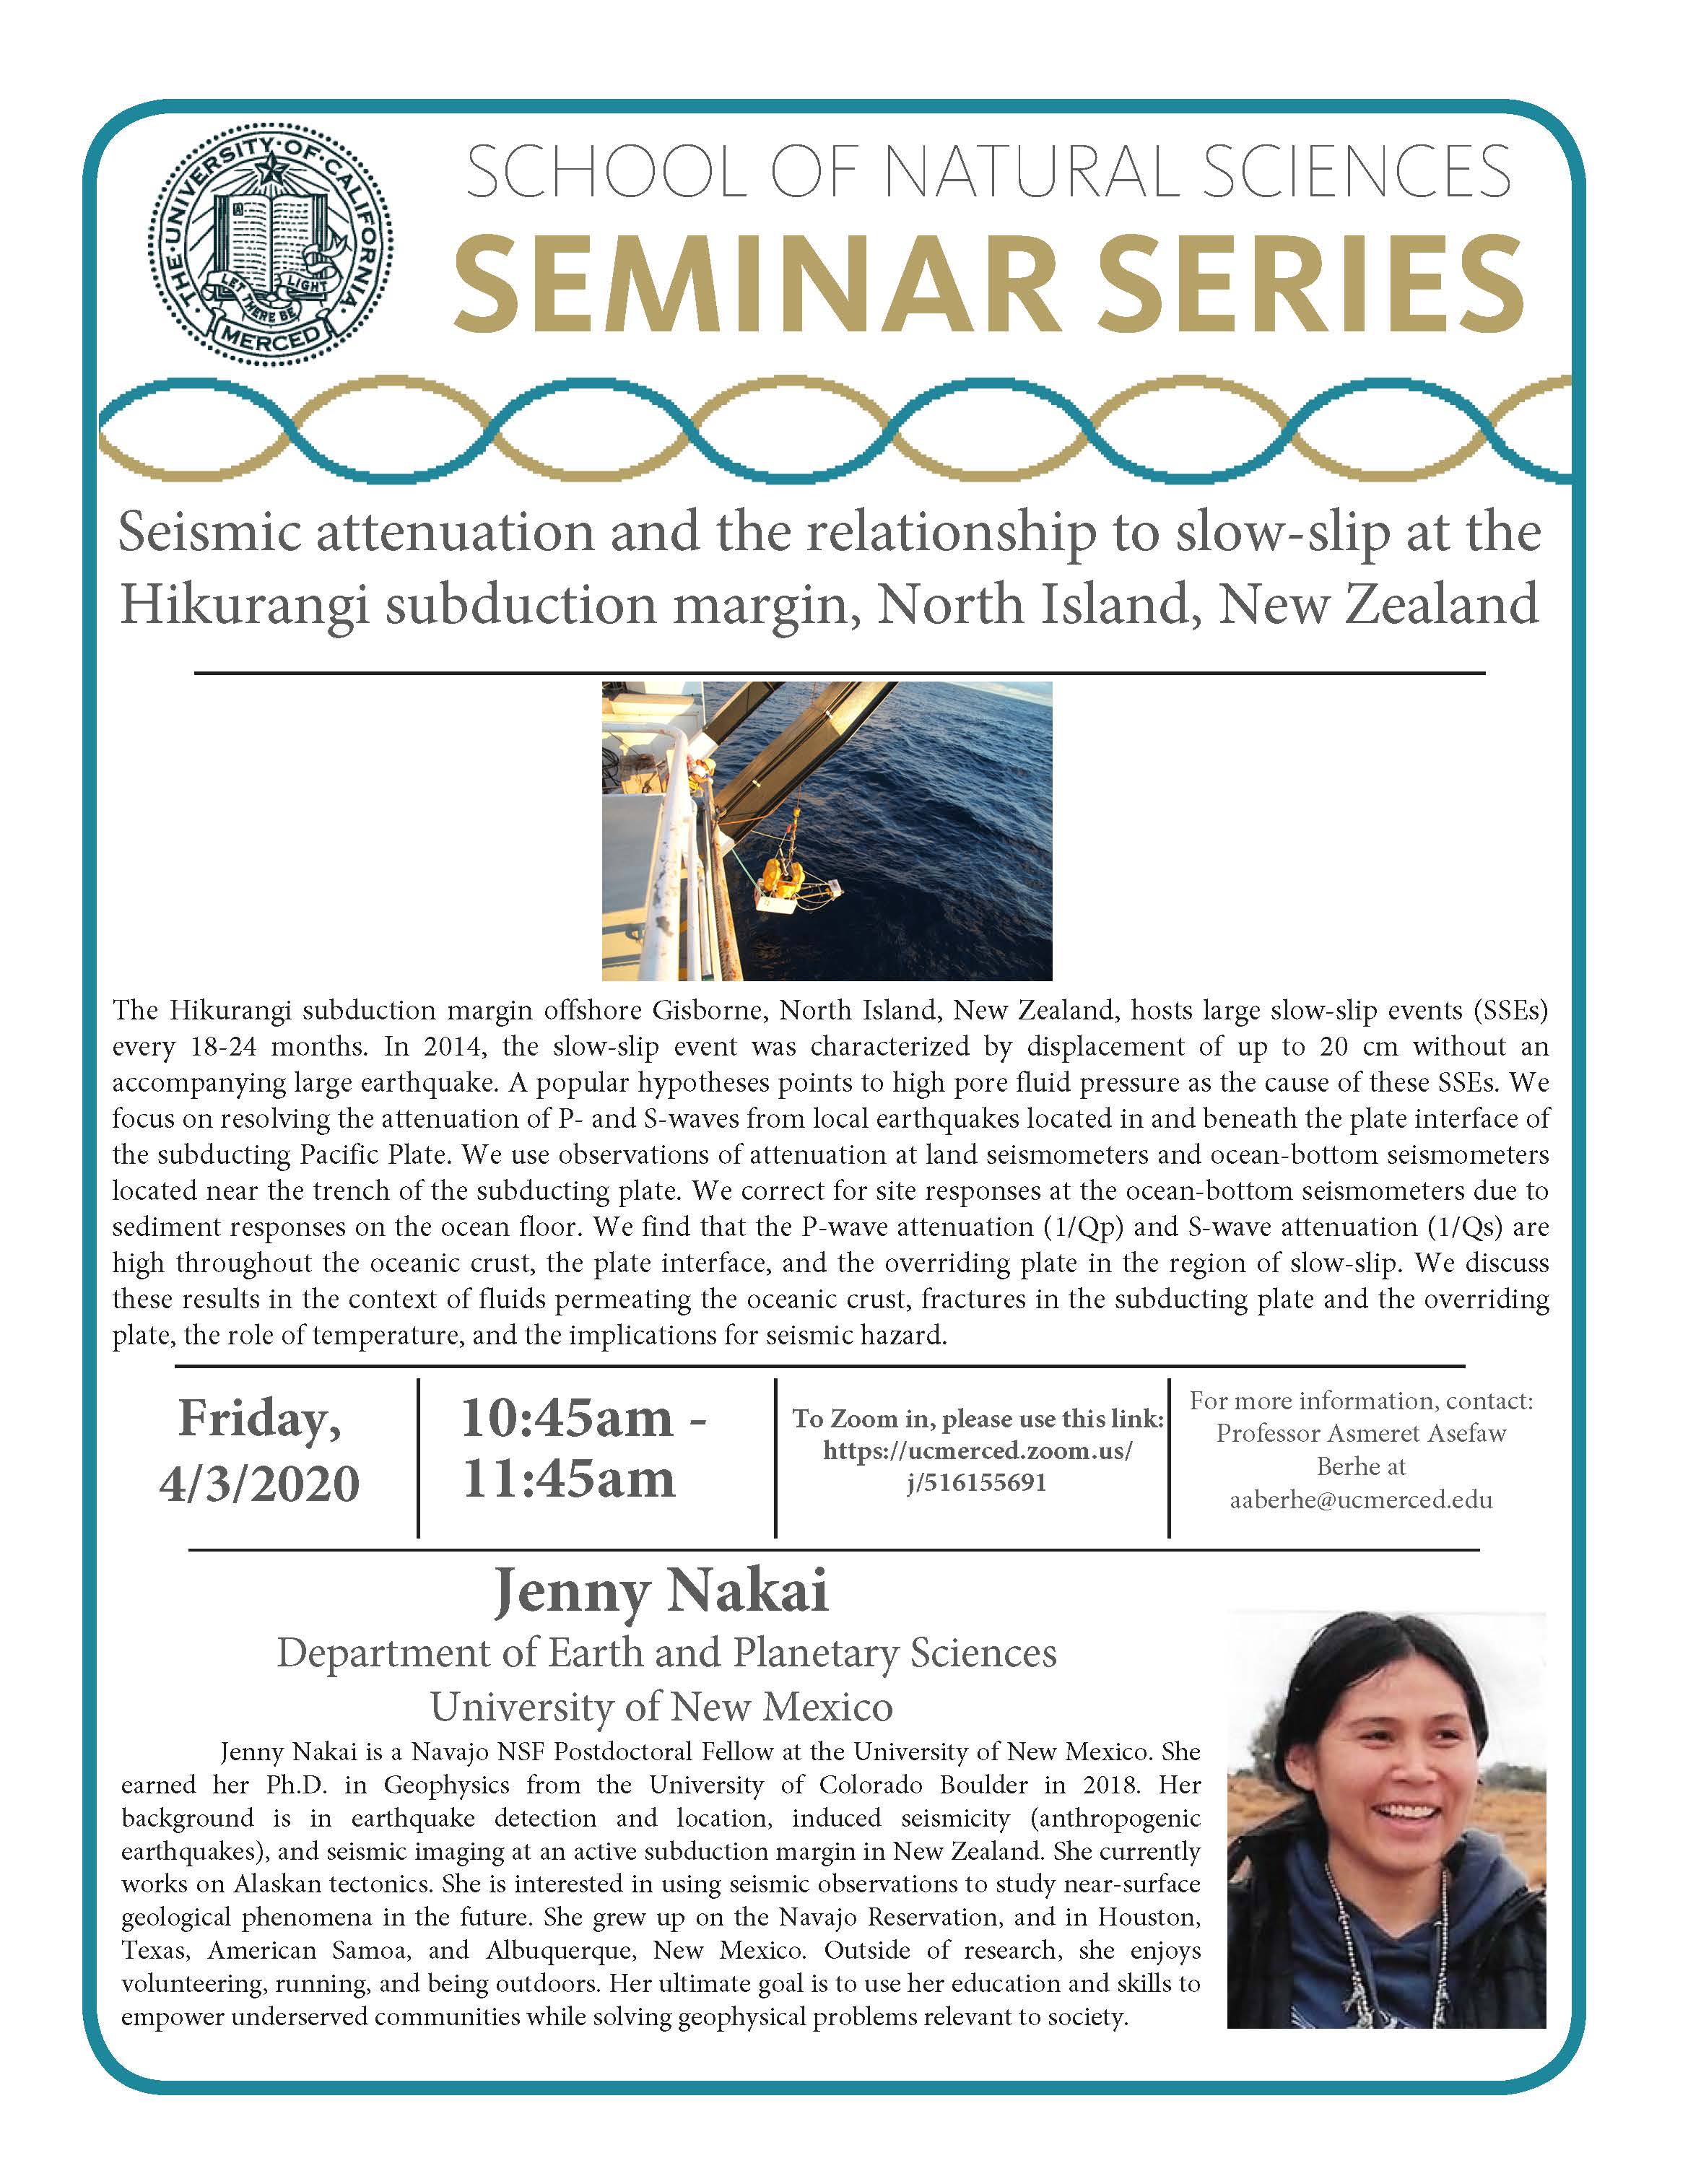 LES Seminar for Dr. Jenny Nakai